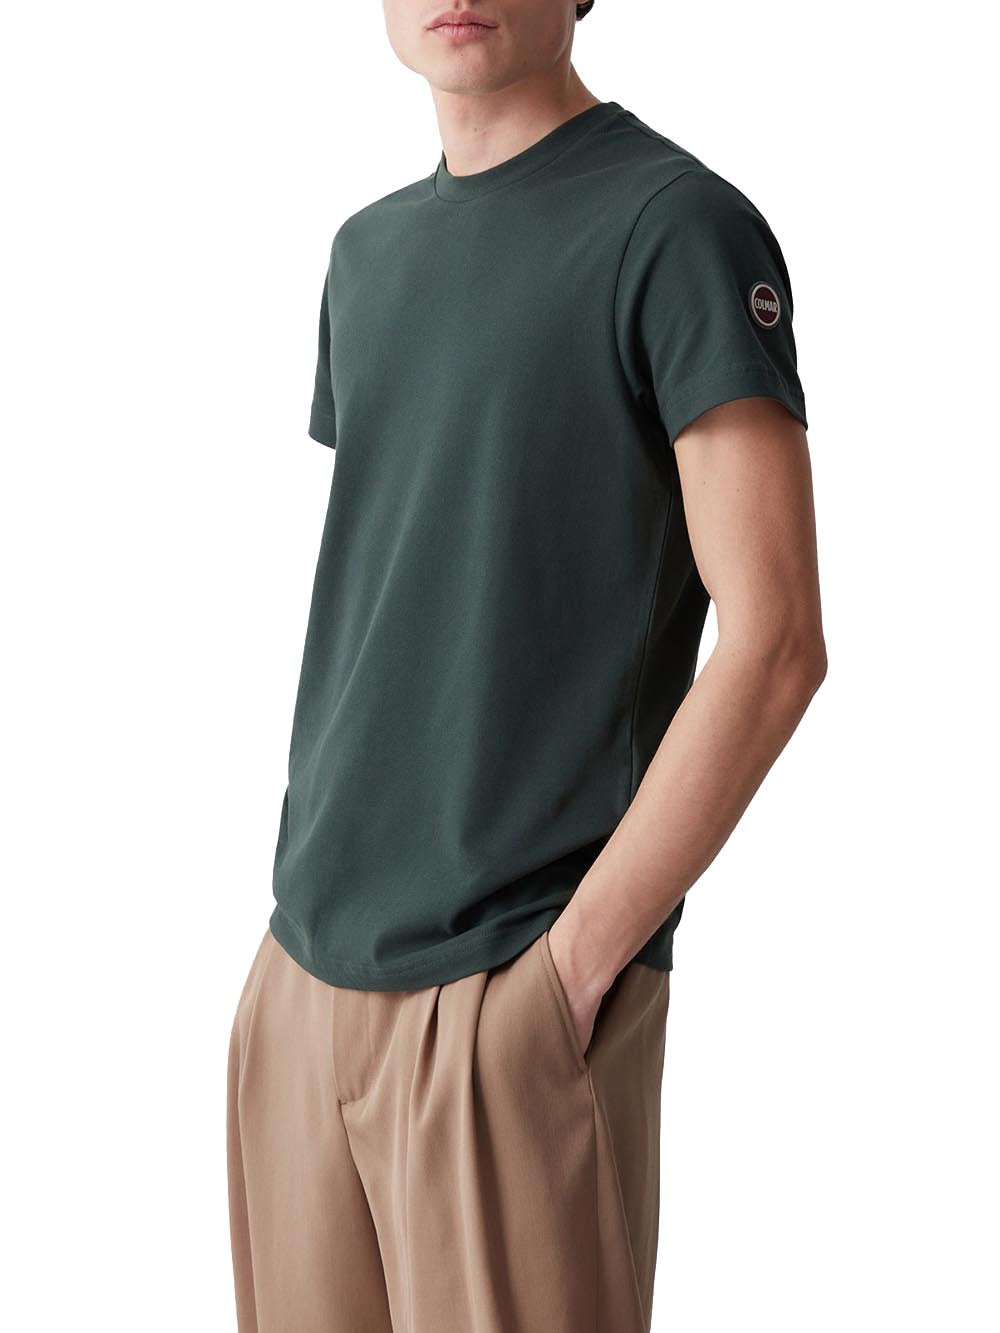 Colmar T-shirt Uomo 7510 4sh Verde scuro